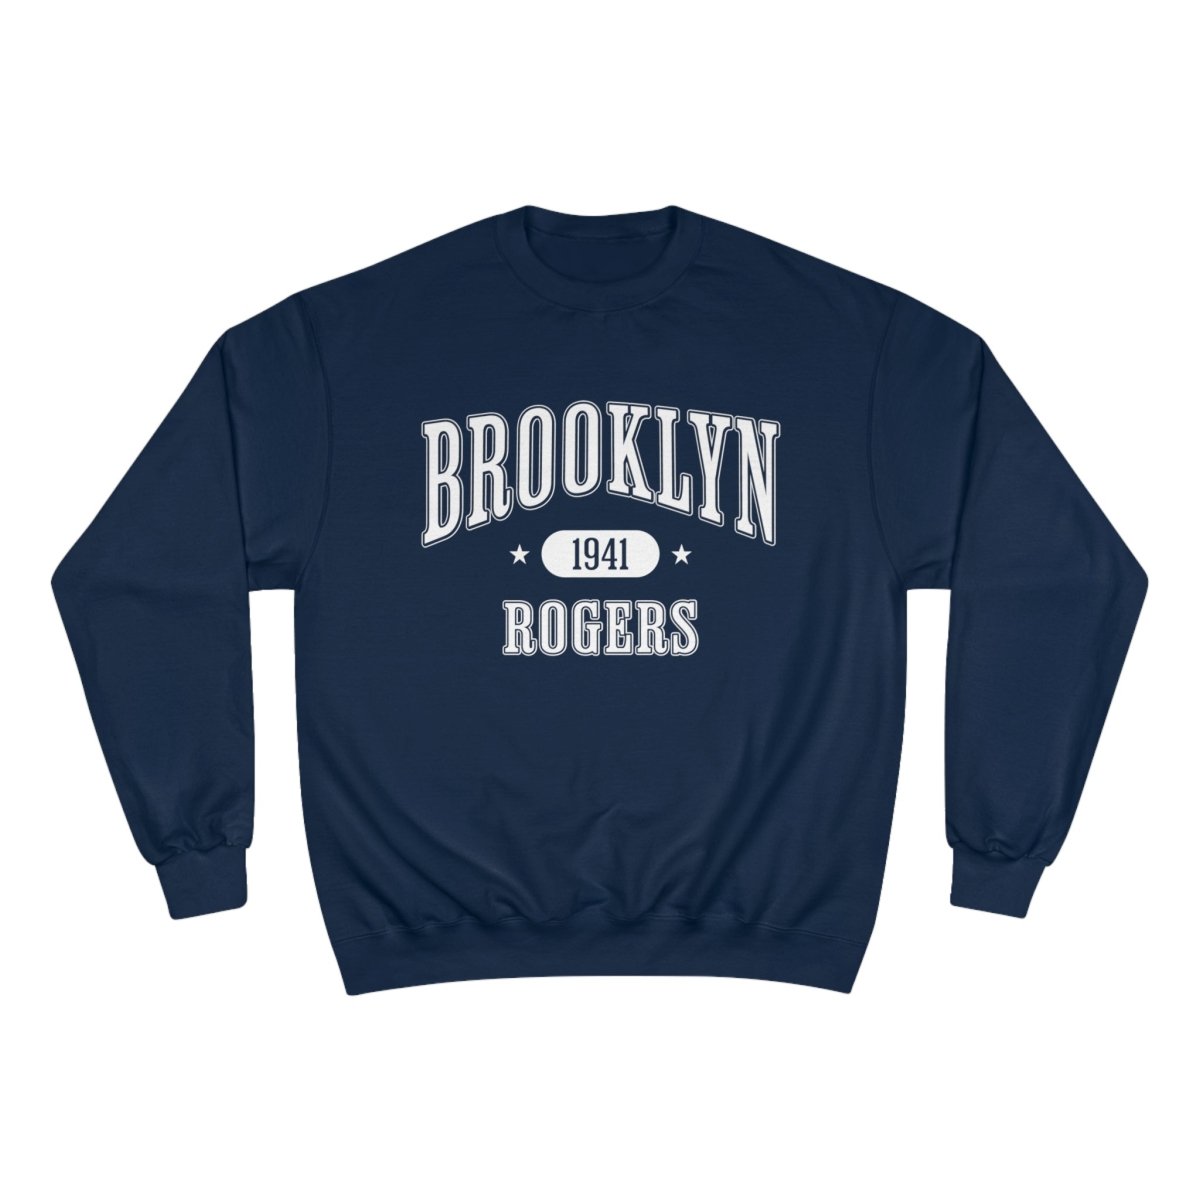 Park Chic Apparel, LLC | Brooklyn Rogers Sweatshirt - Adult Sweatshirt